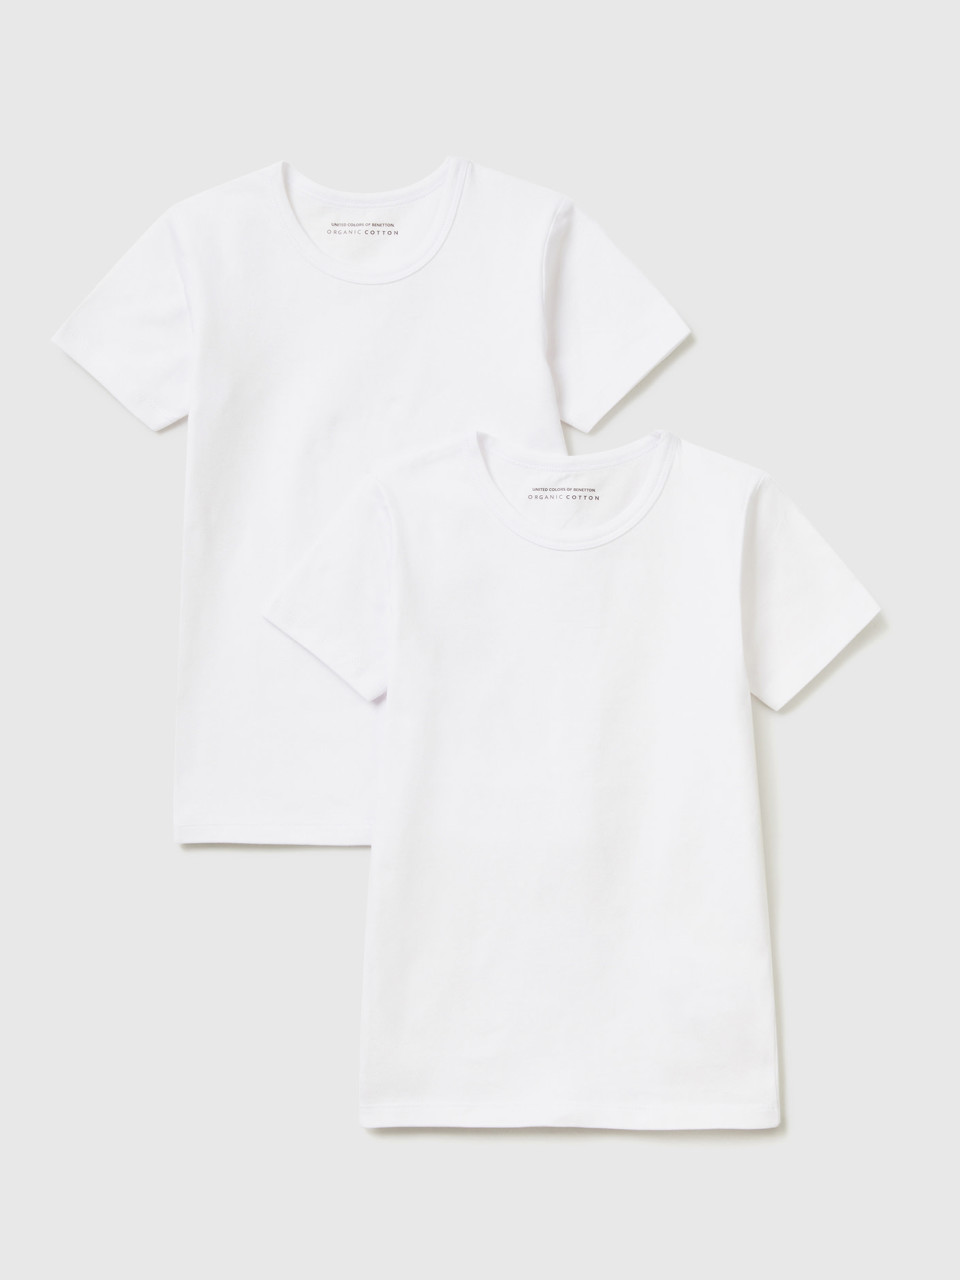 Benetton, Two Stretch Organic Cotton T-shirts, White, Kids